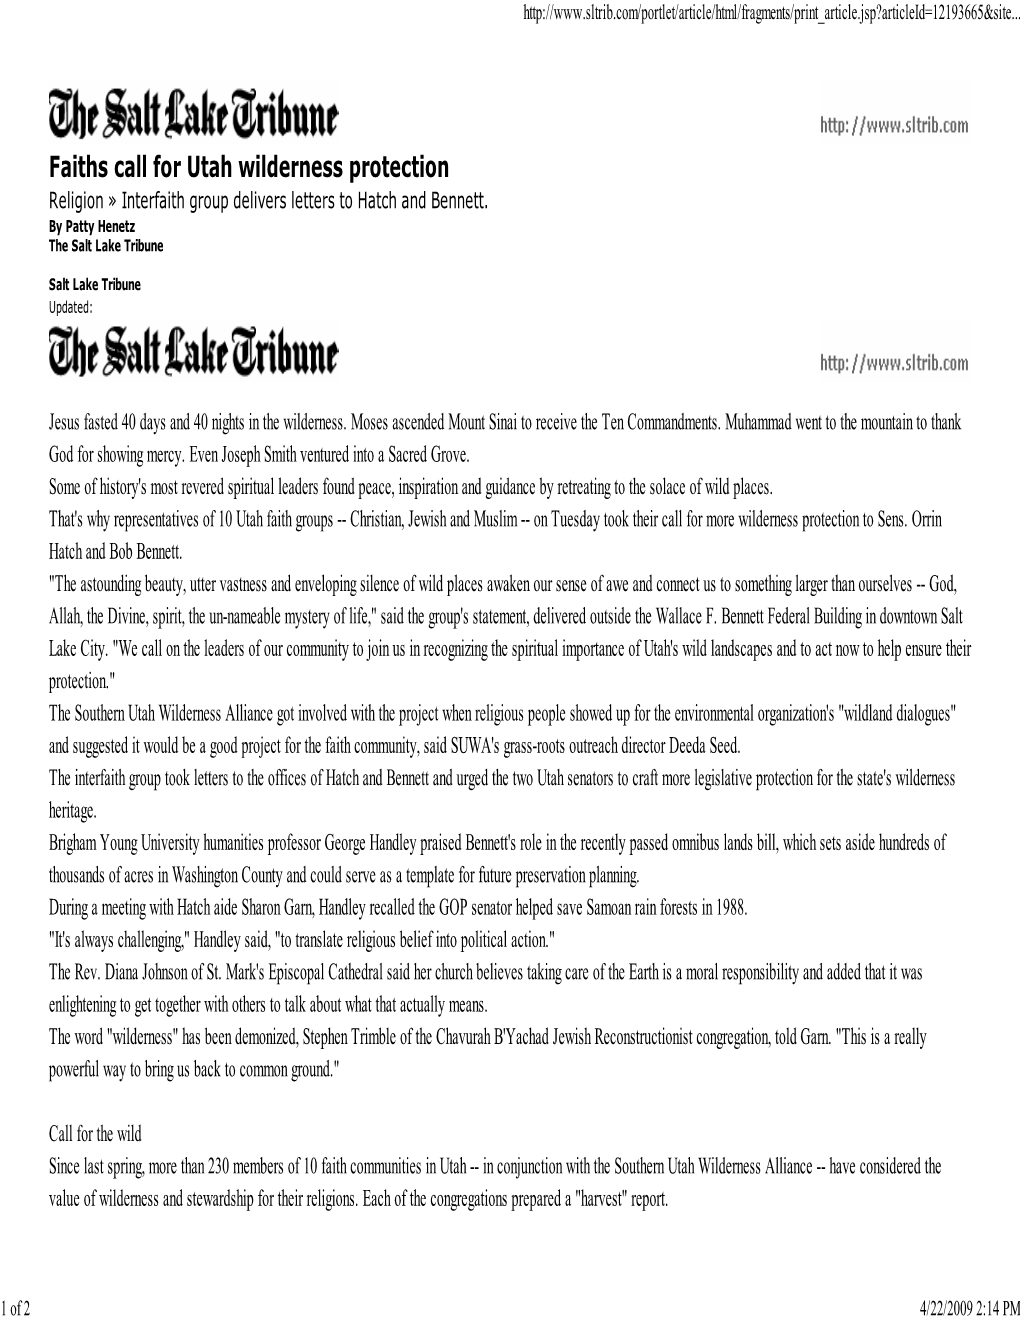 The Salt Lake Tribune Story